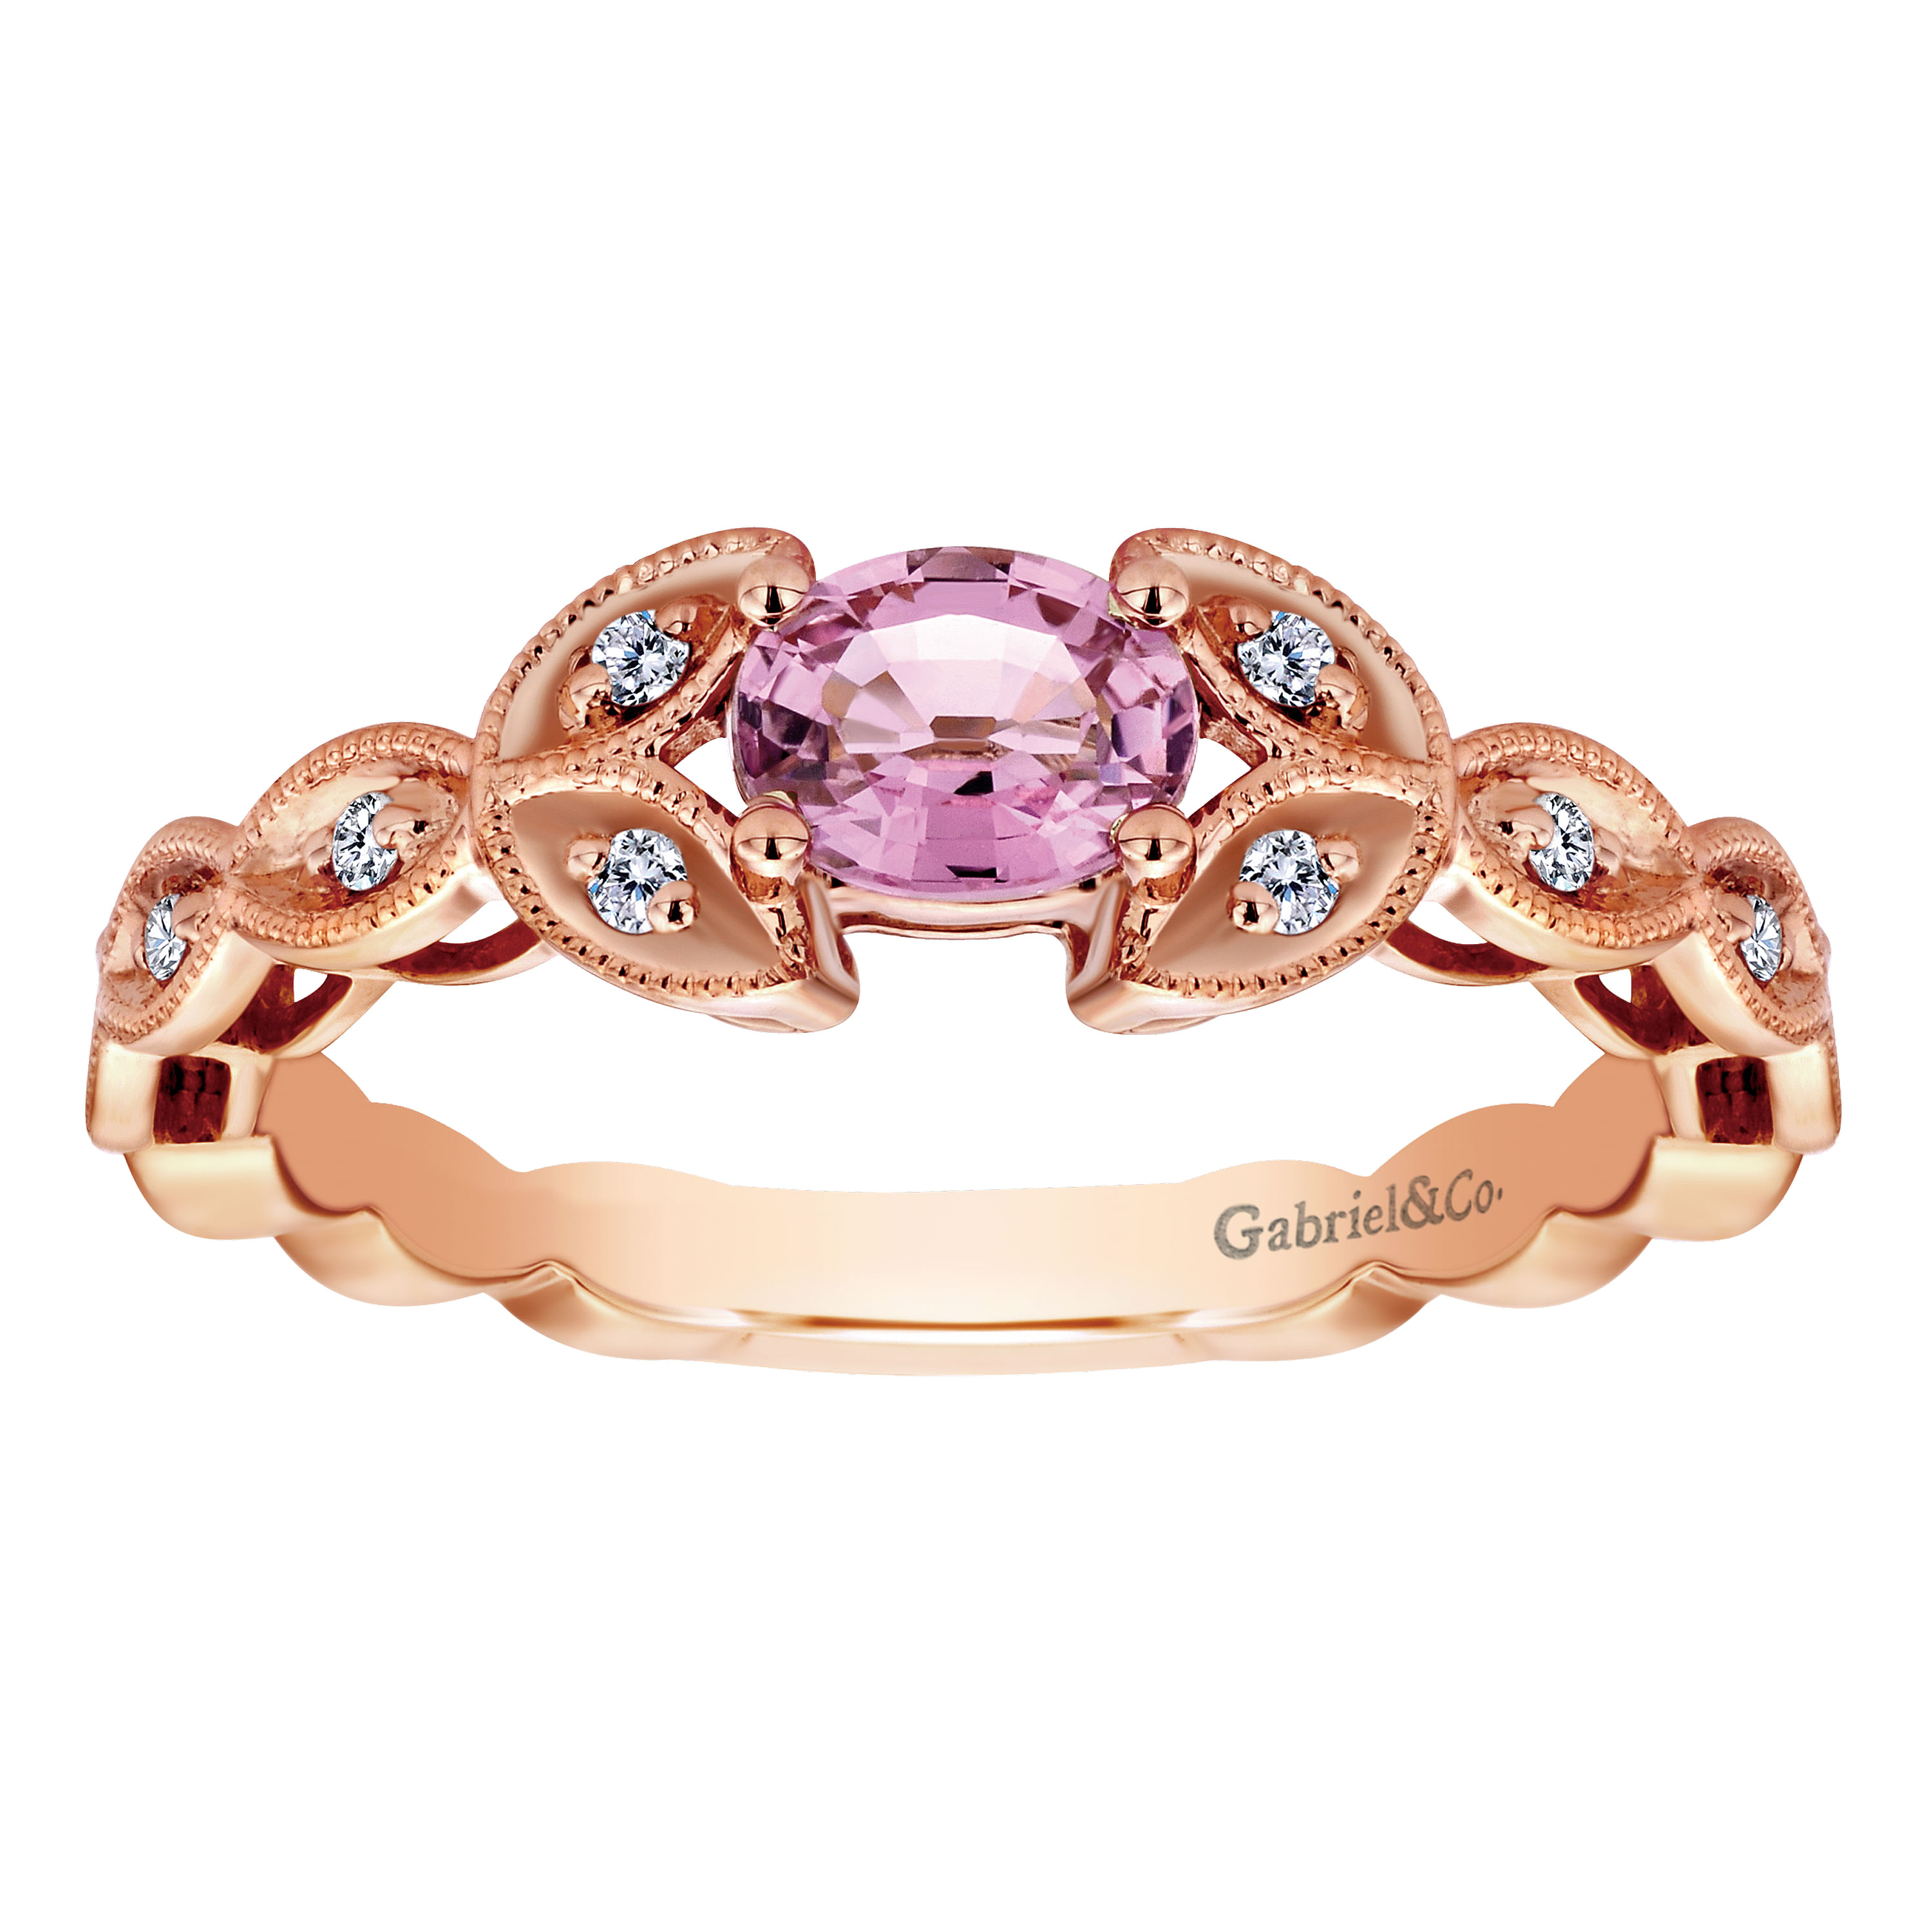 14K Rose Gold Diamond and Pink Sapphire Ladies Ring